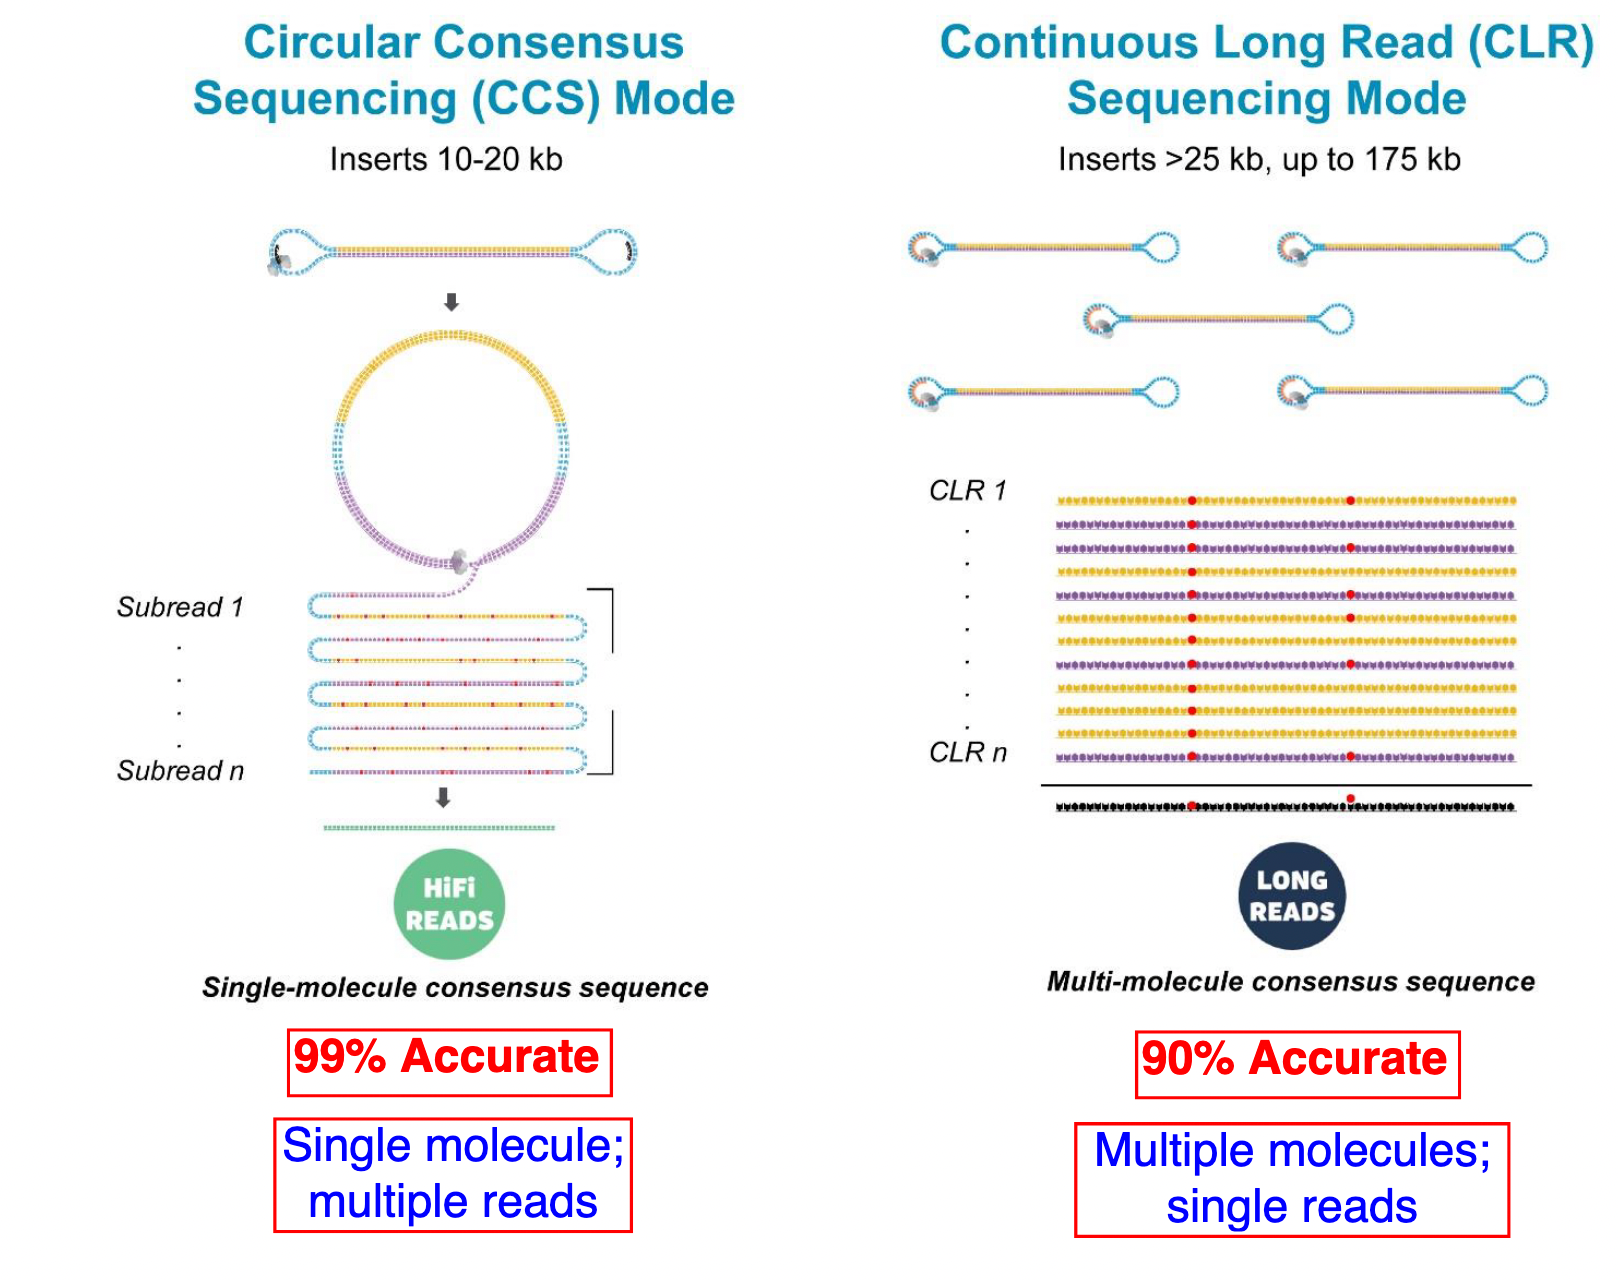 Comparison between PacBio HiFi and CLR sequencing methods. 